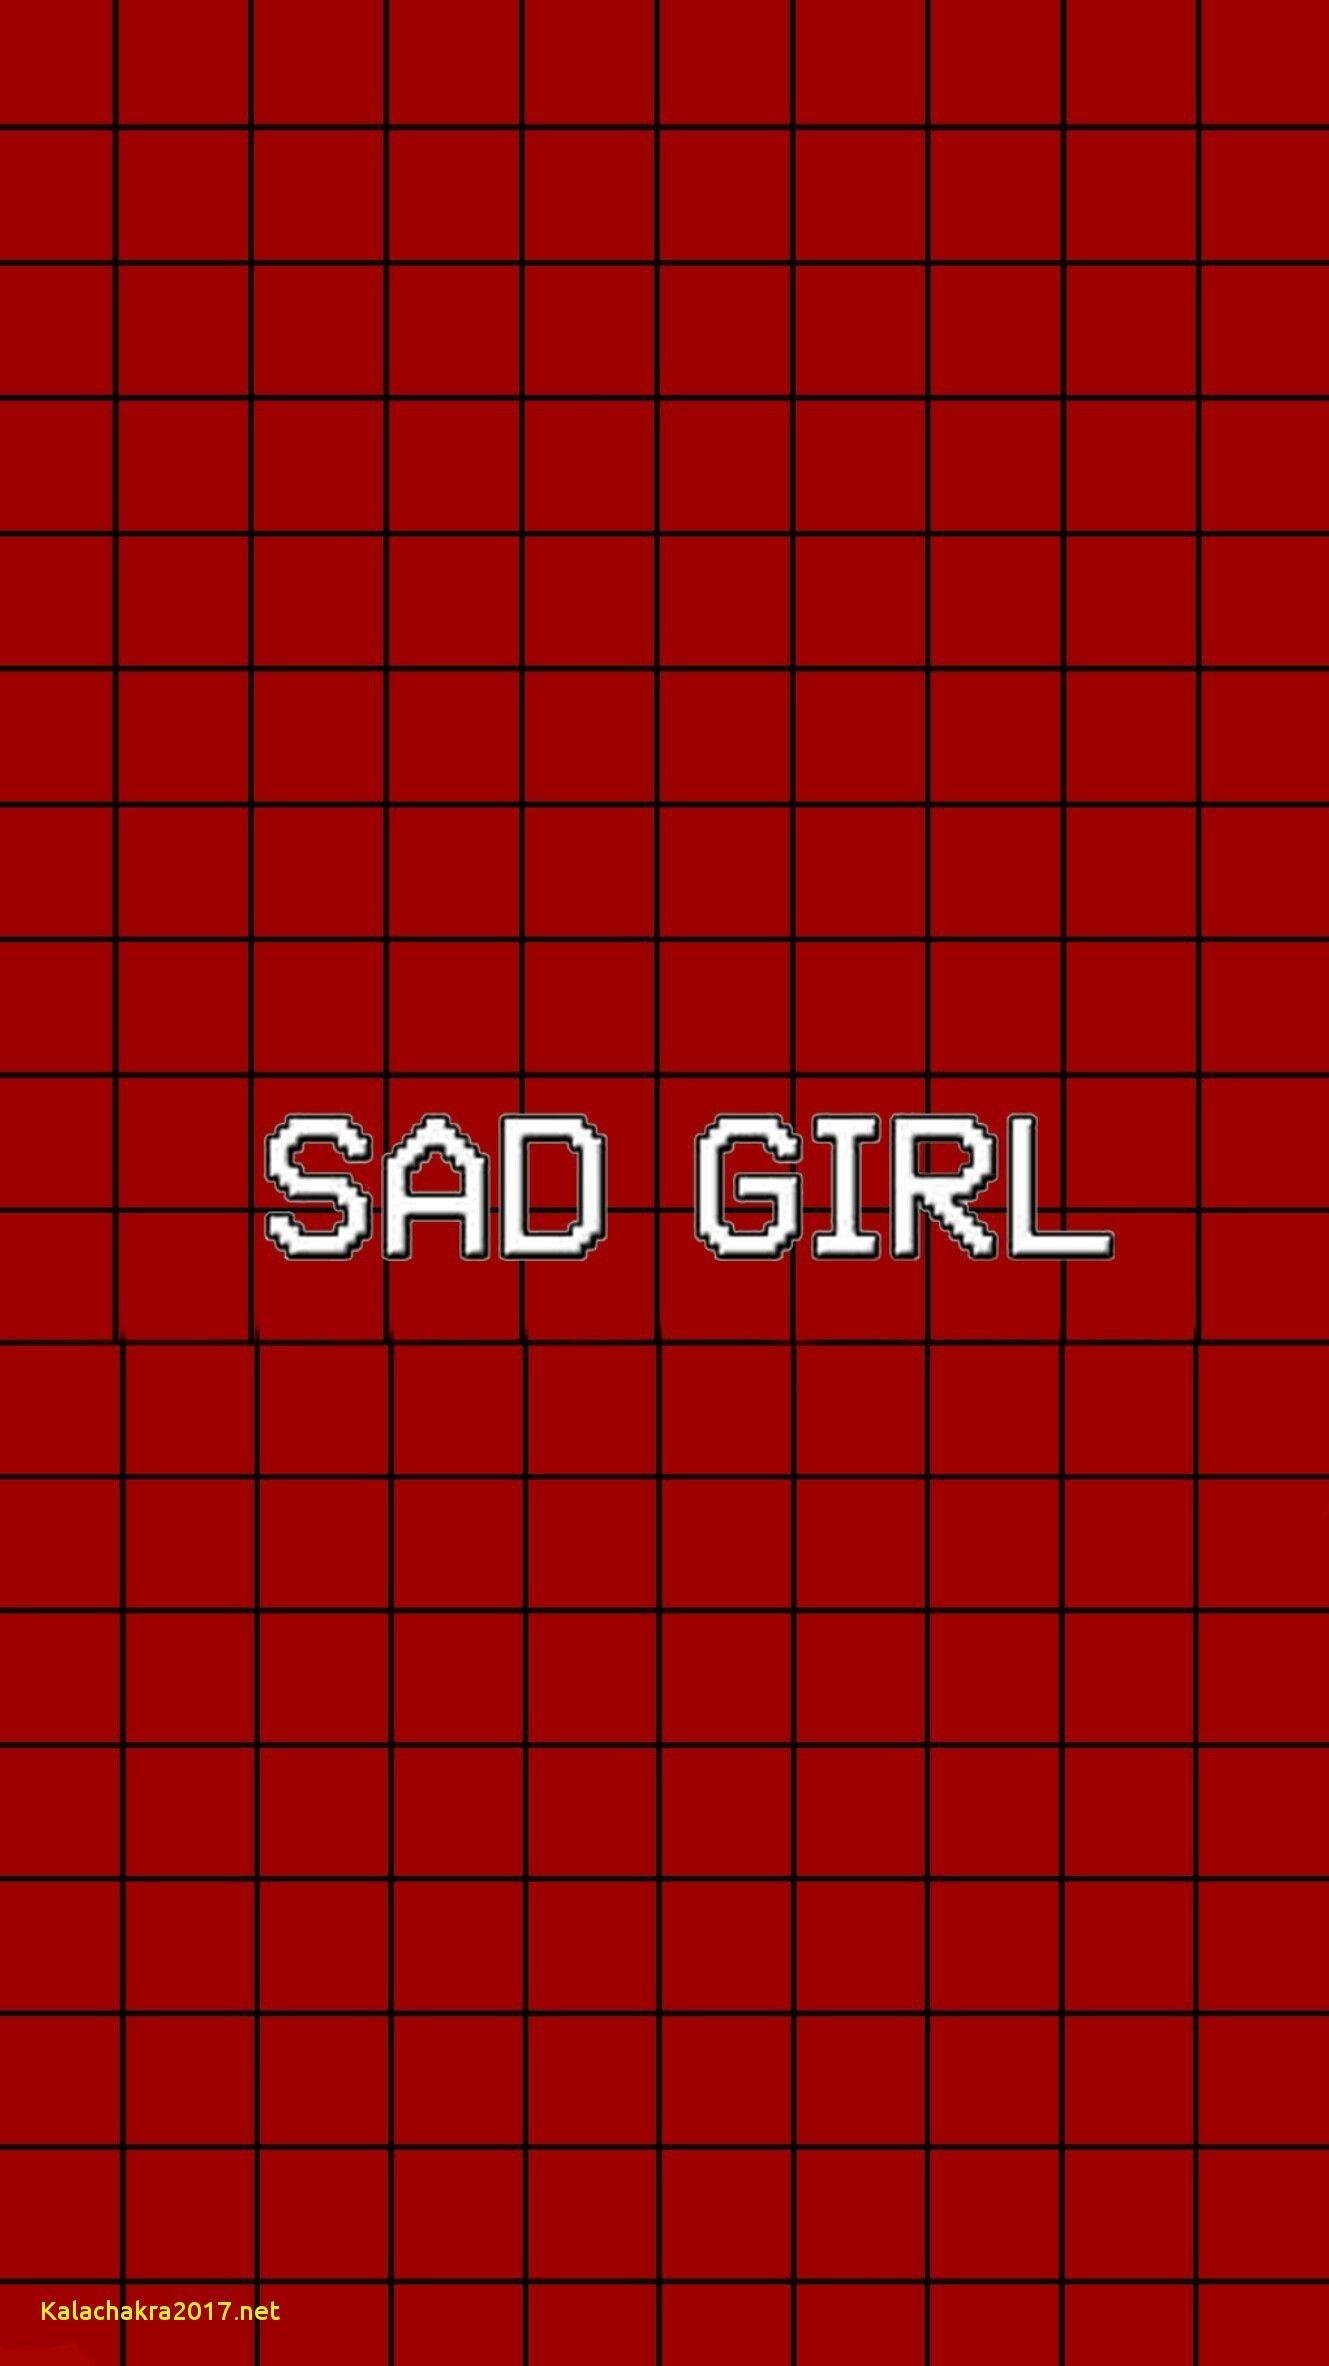 sad girl pictures tumblr